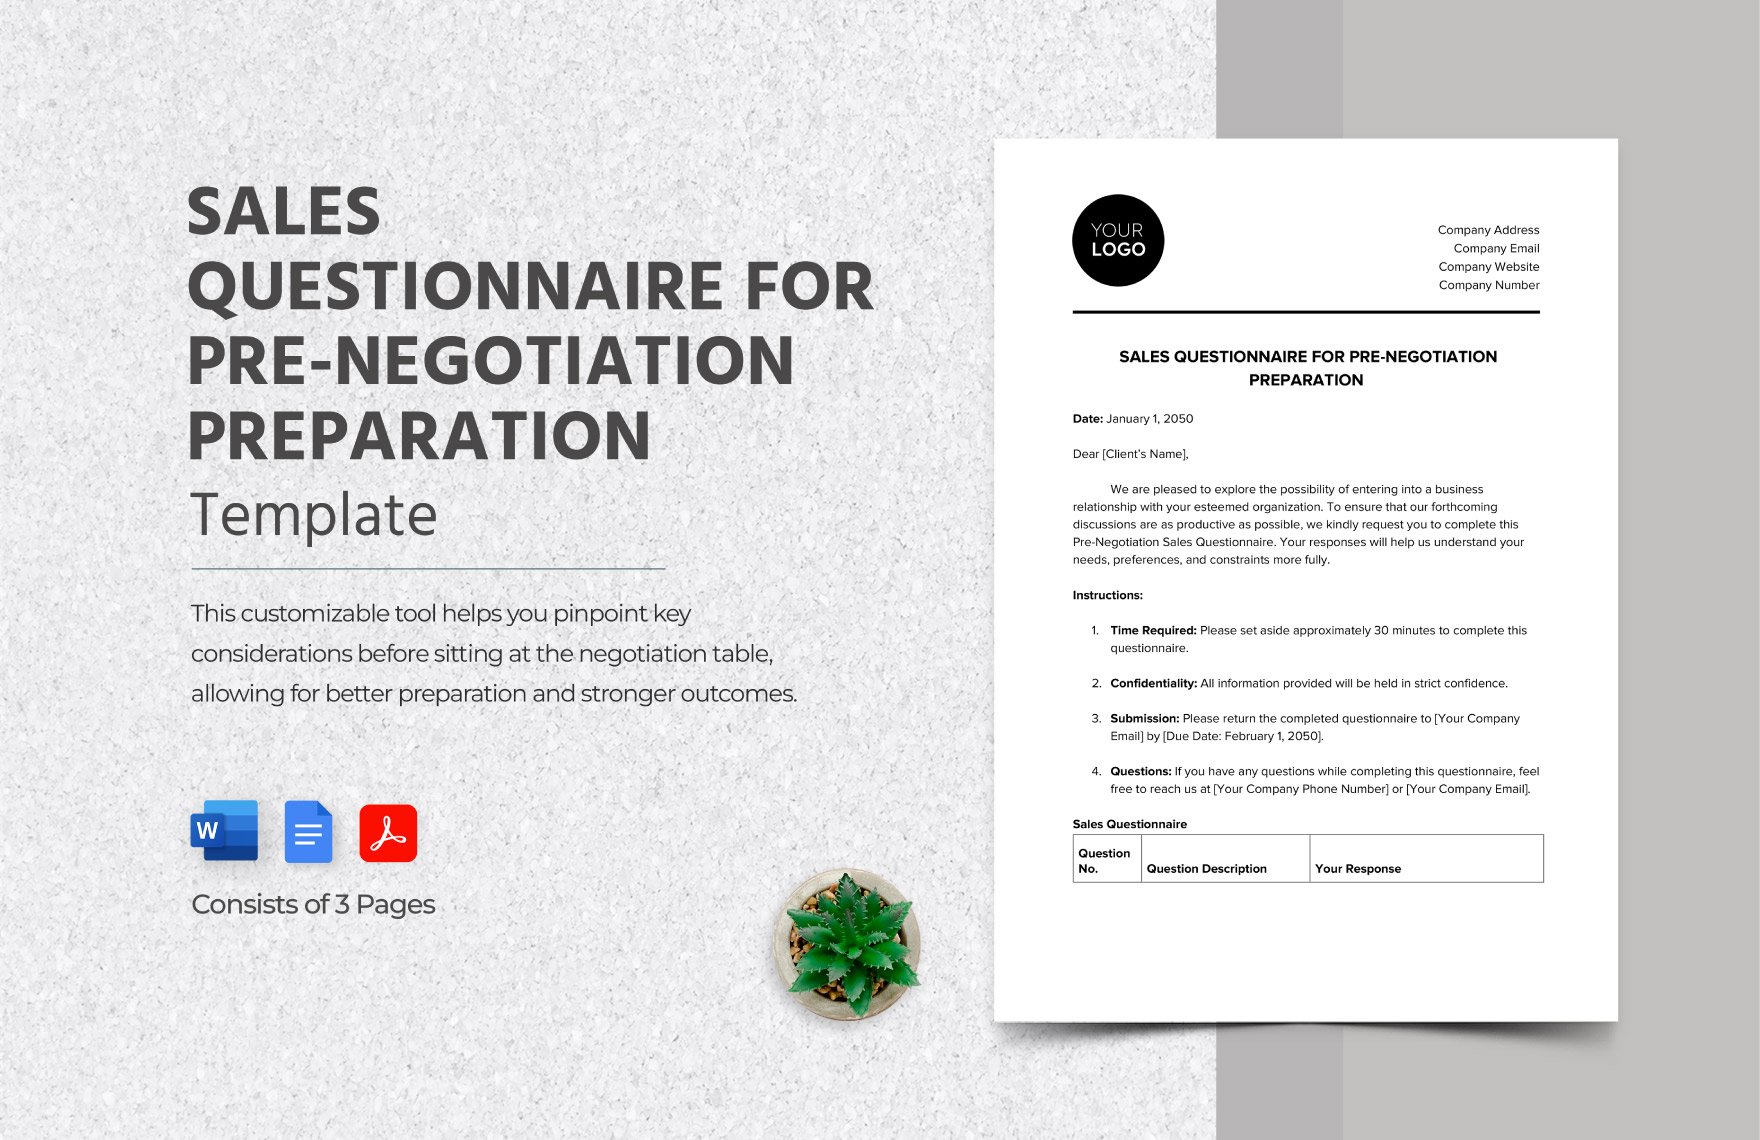 Sales Questionnaire for Pre-Negotiation Preparation Template